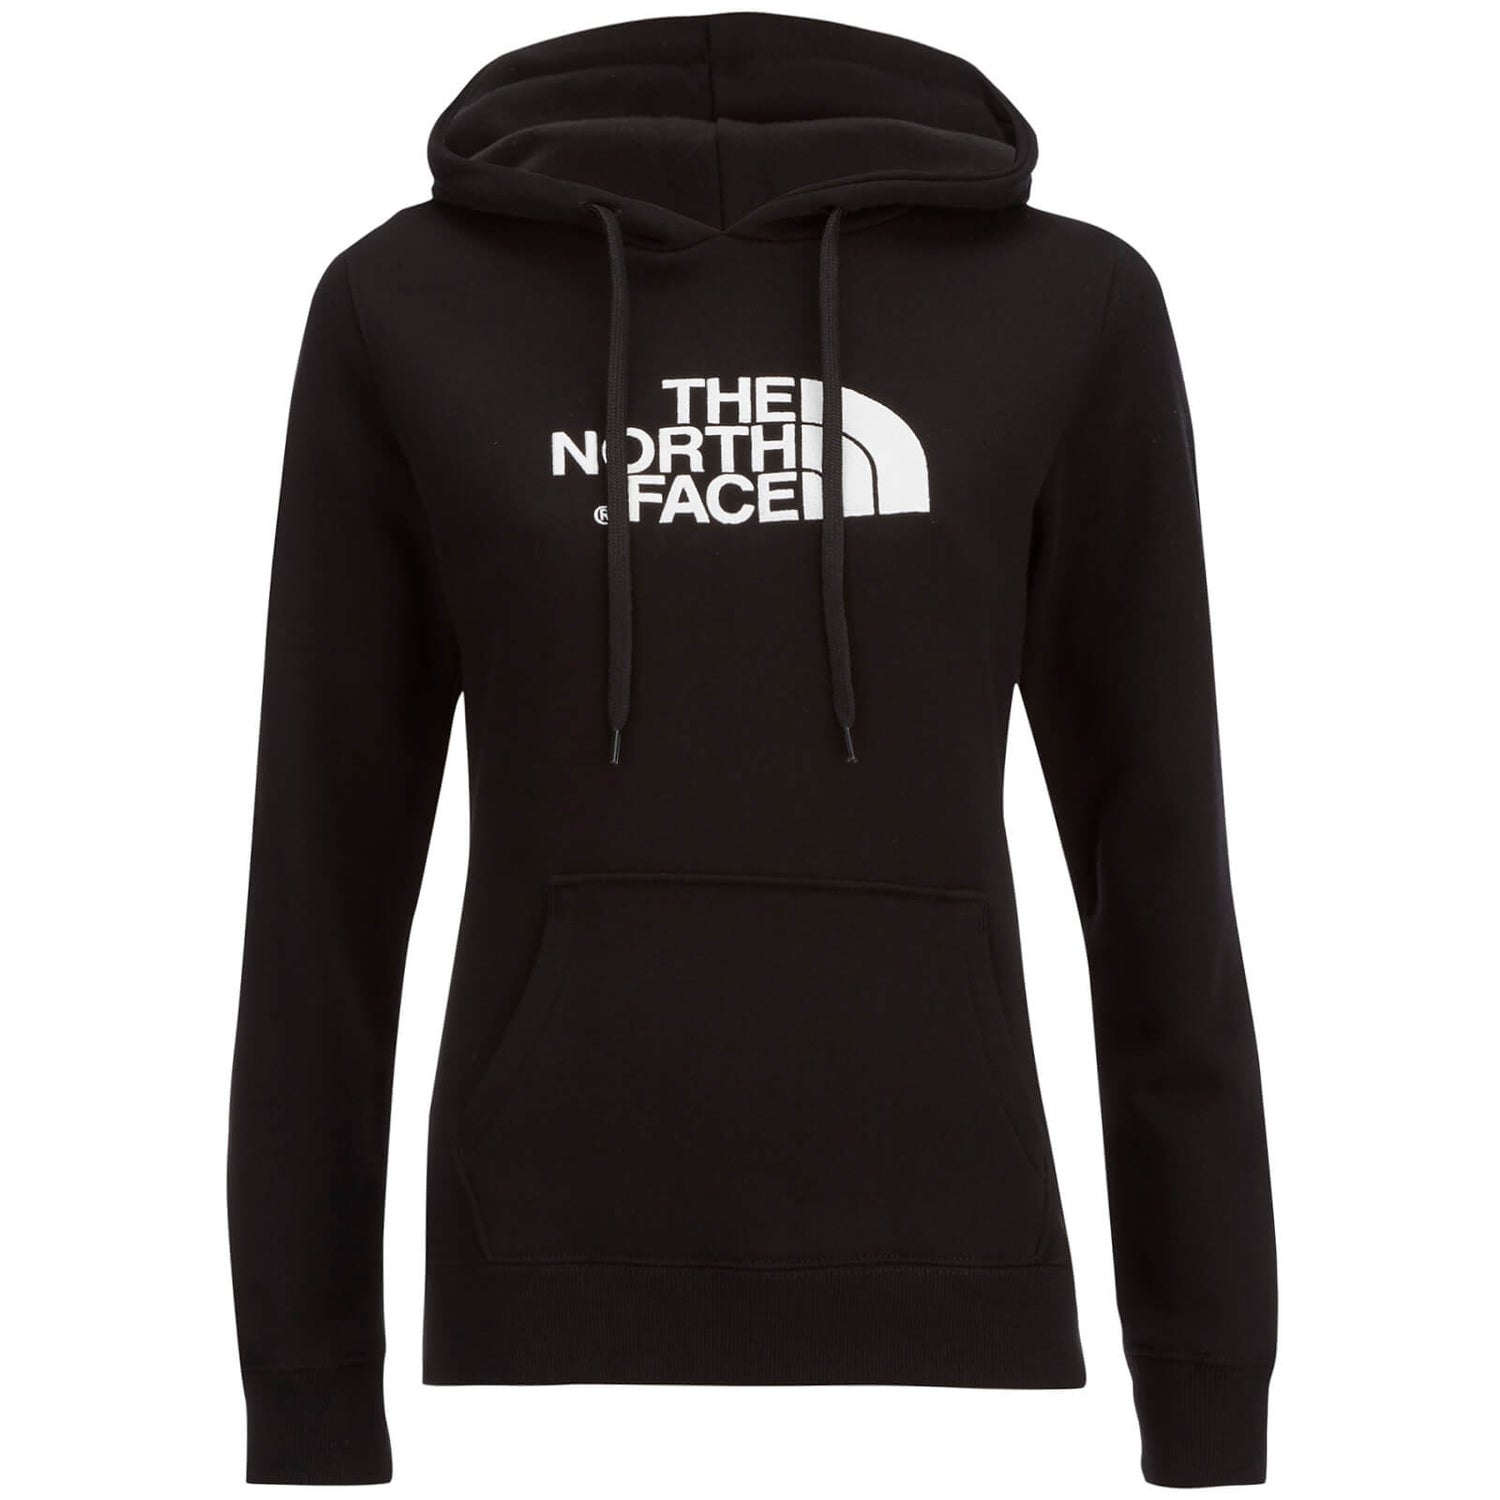 The North Face Women's Drew Peak Pullover Hoody - TNF Black - XS